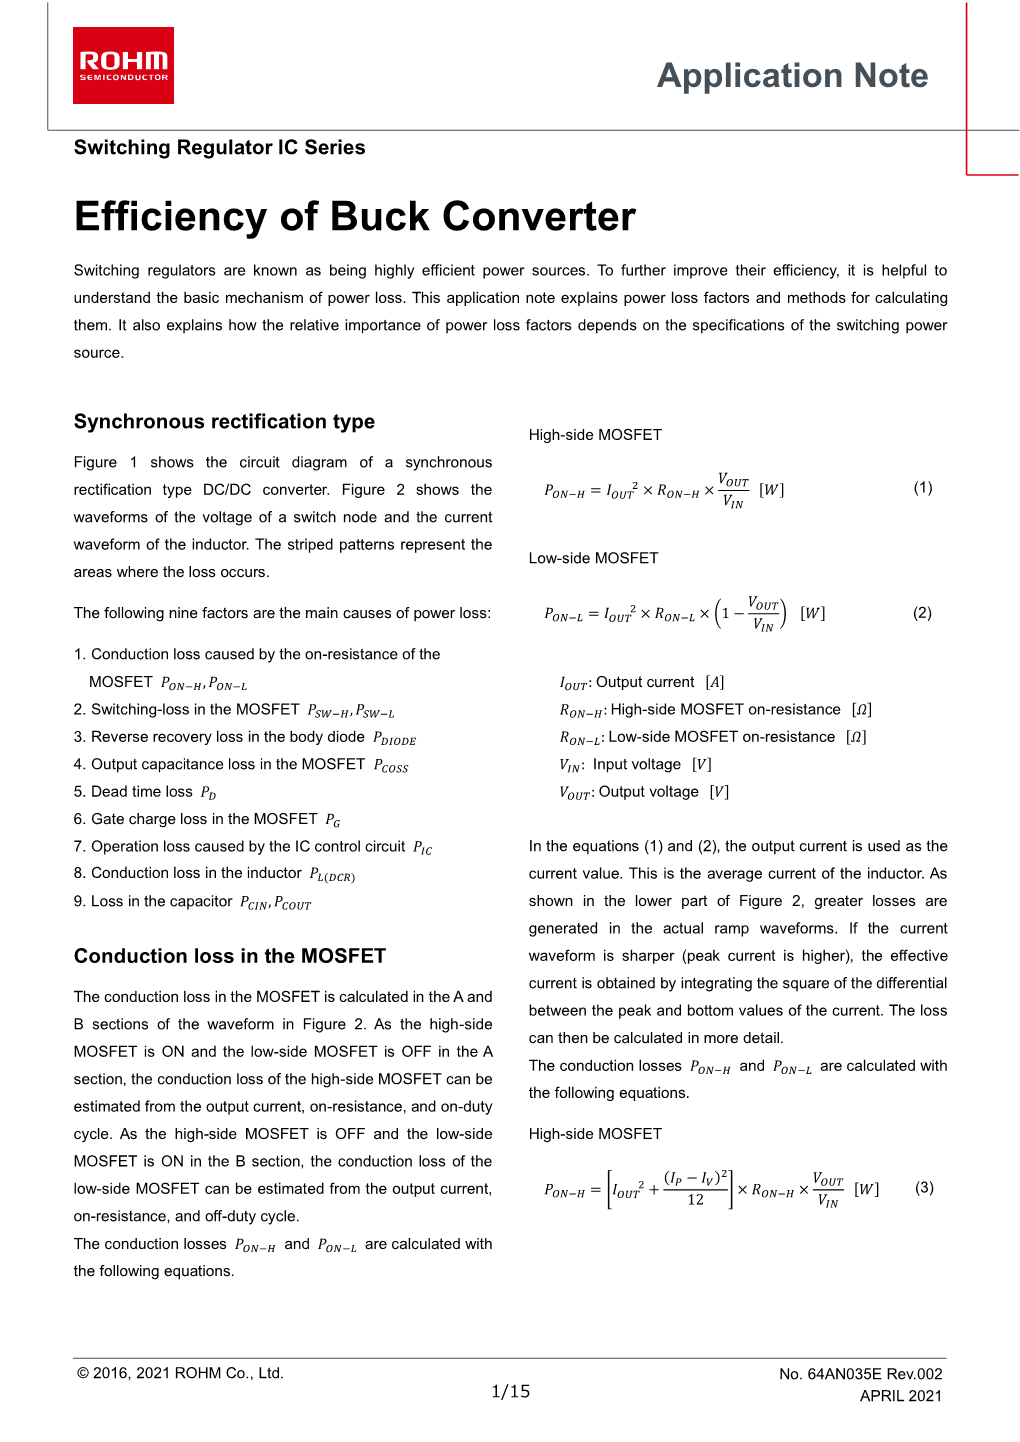 Efficiency of Buck Converter